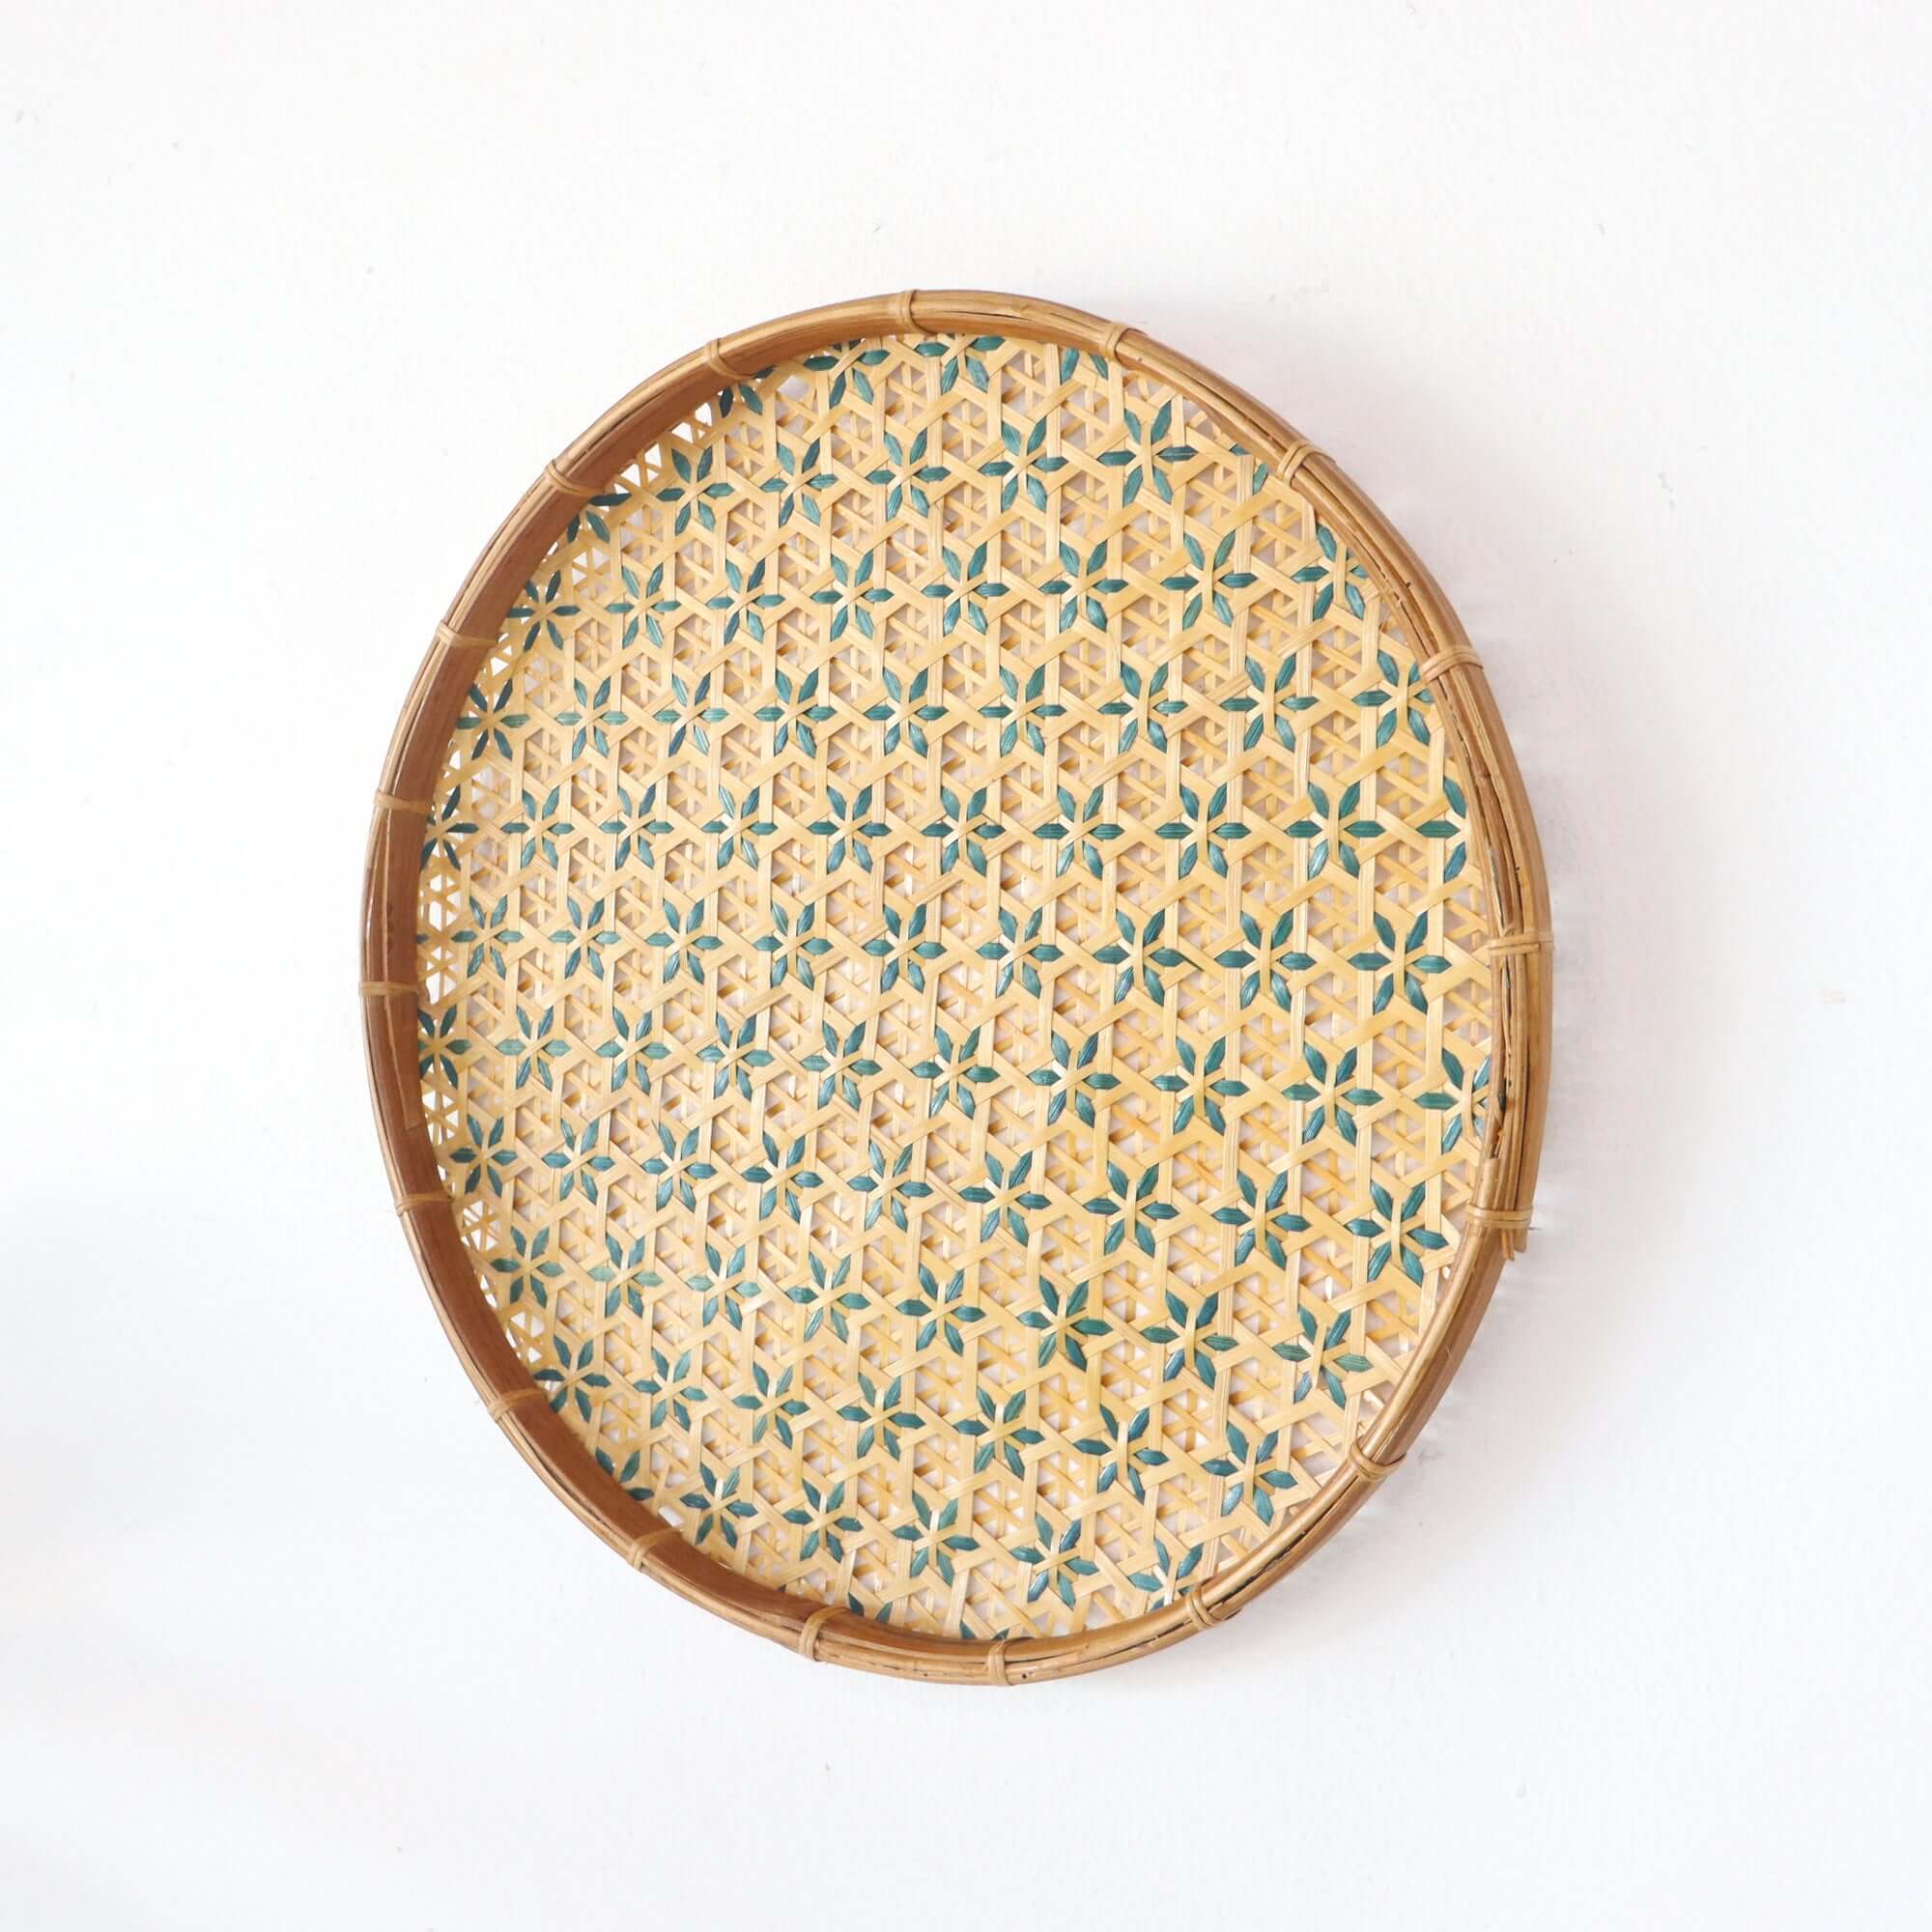 KA NOK CHAN- DIY Wall Art Basket Decor 13 inches